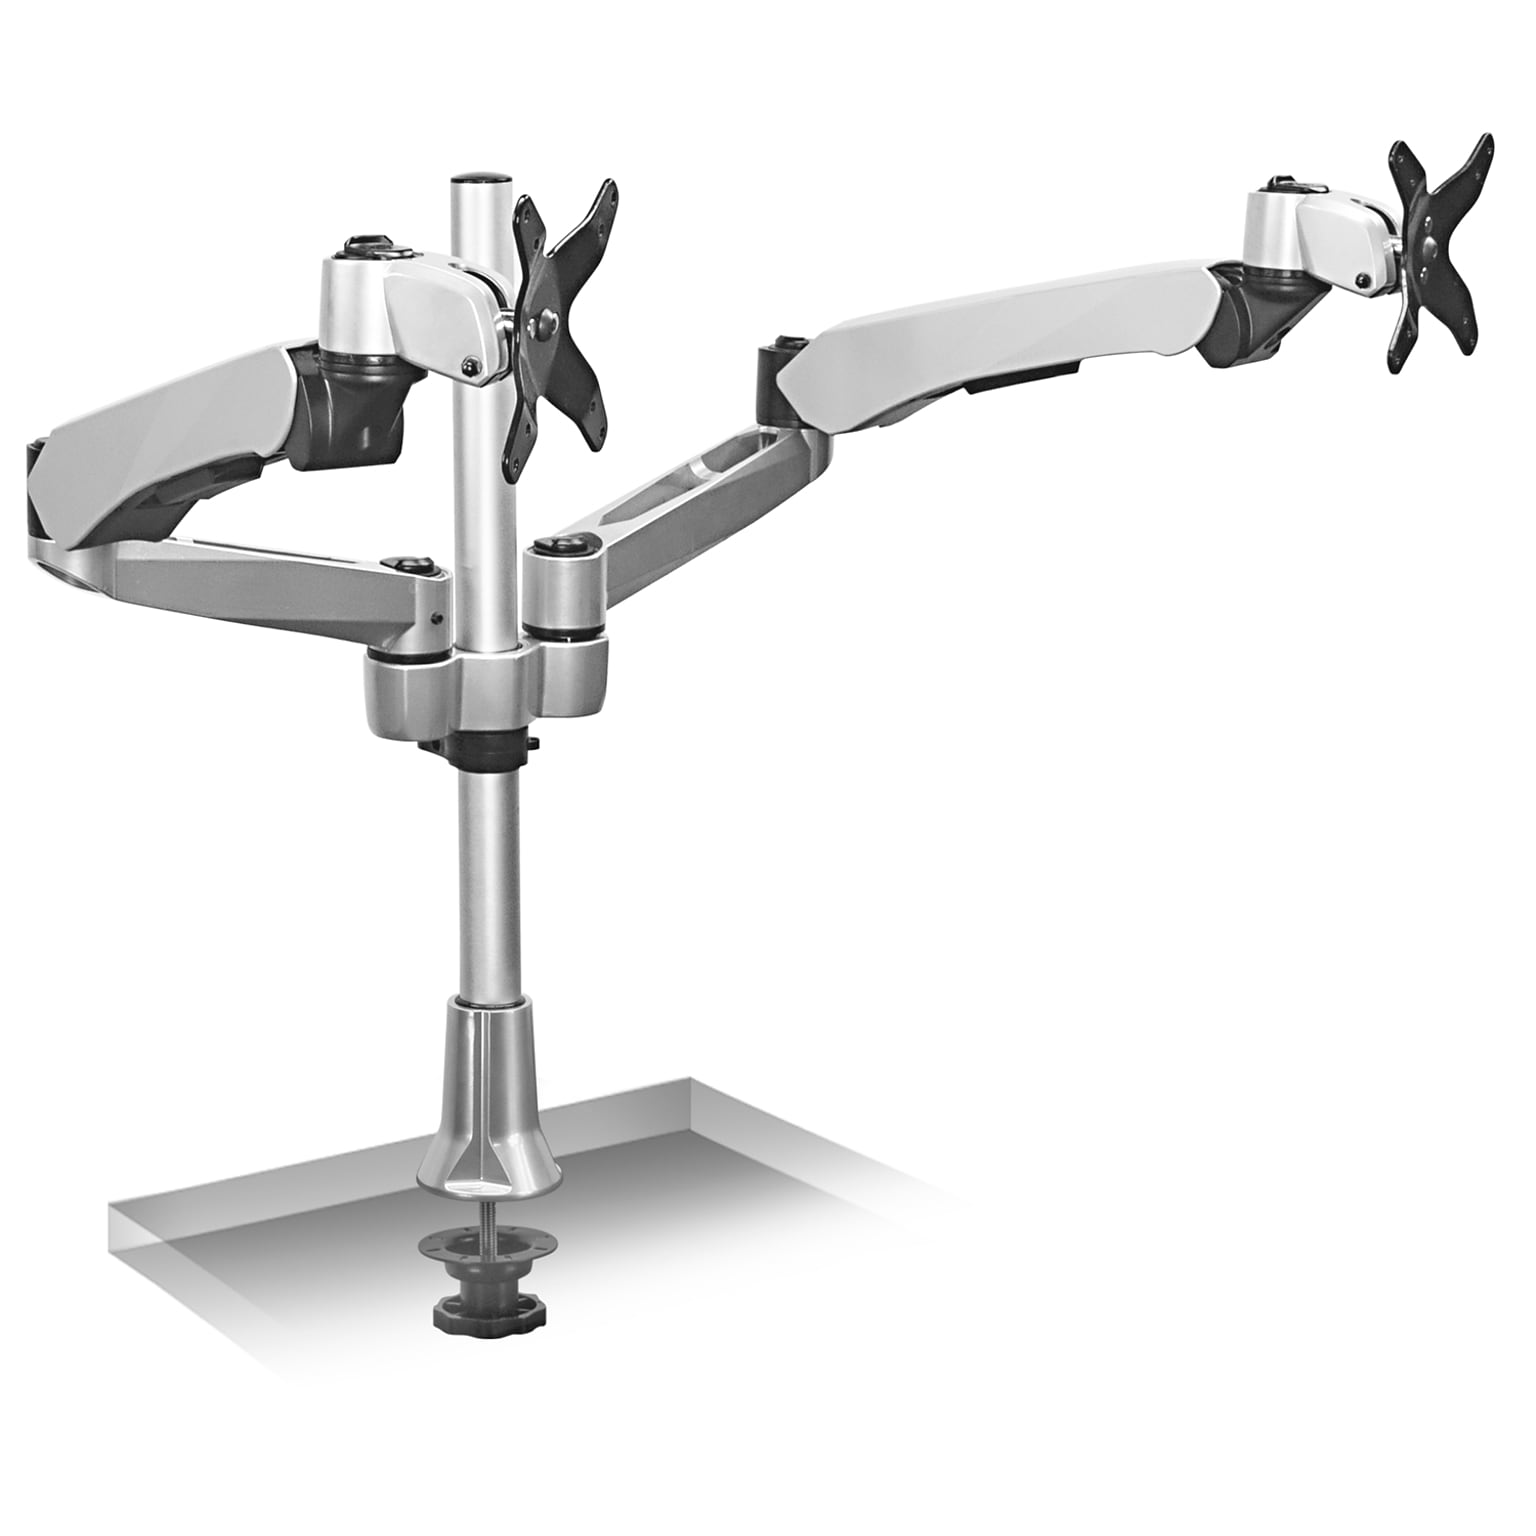 Mount-It! Modular Desk Mount Adjustable Monitor Arm, Up to 24 Monitors, Gray/Silver (MI-45111)